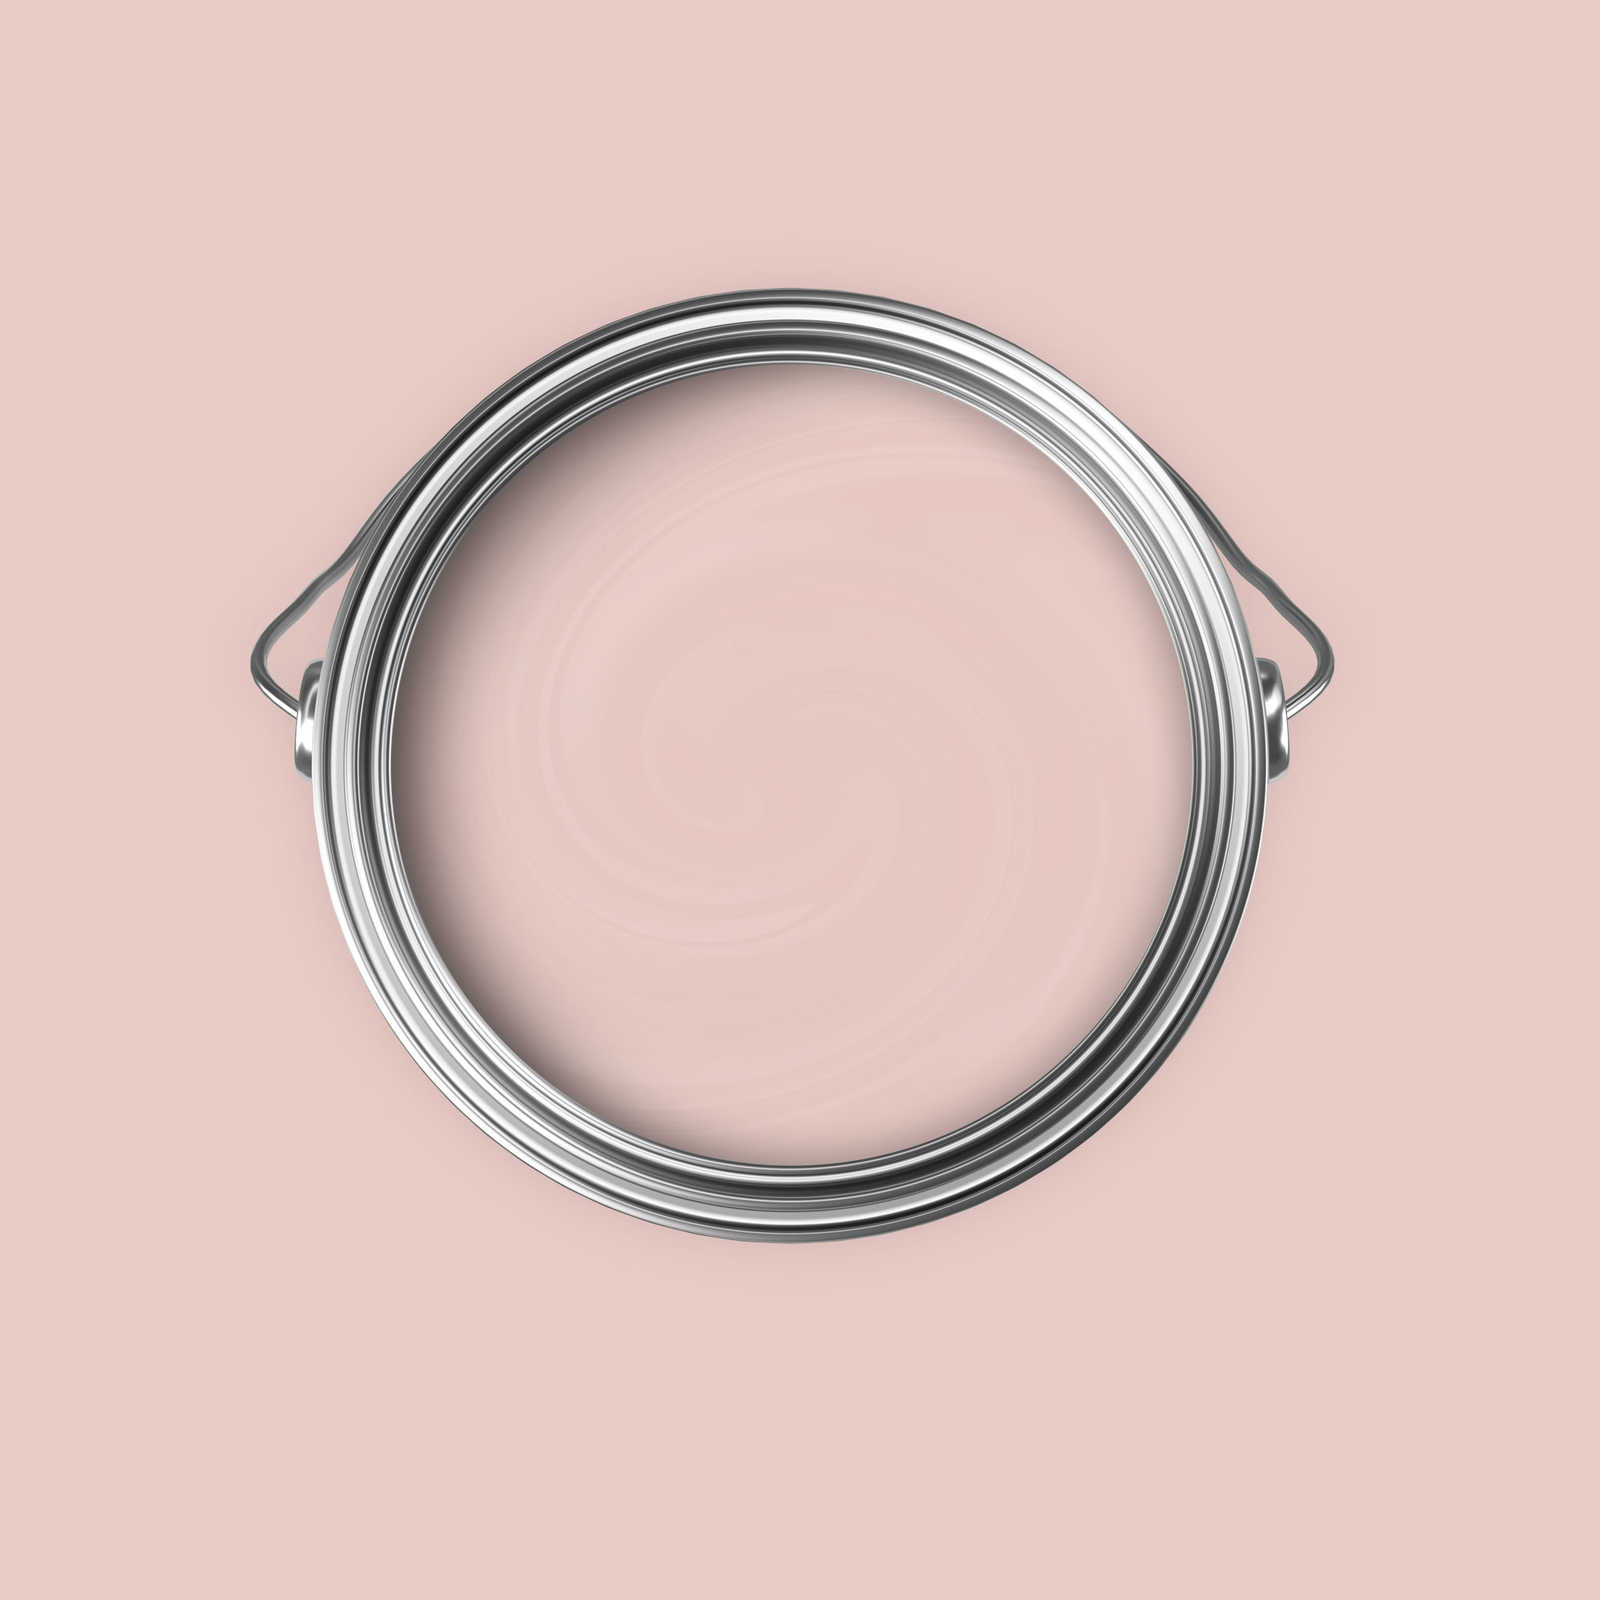             Premium Muurverf Homely Old Pink »Luxury Lipstick« NW1001 – 5 liter
        